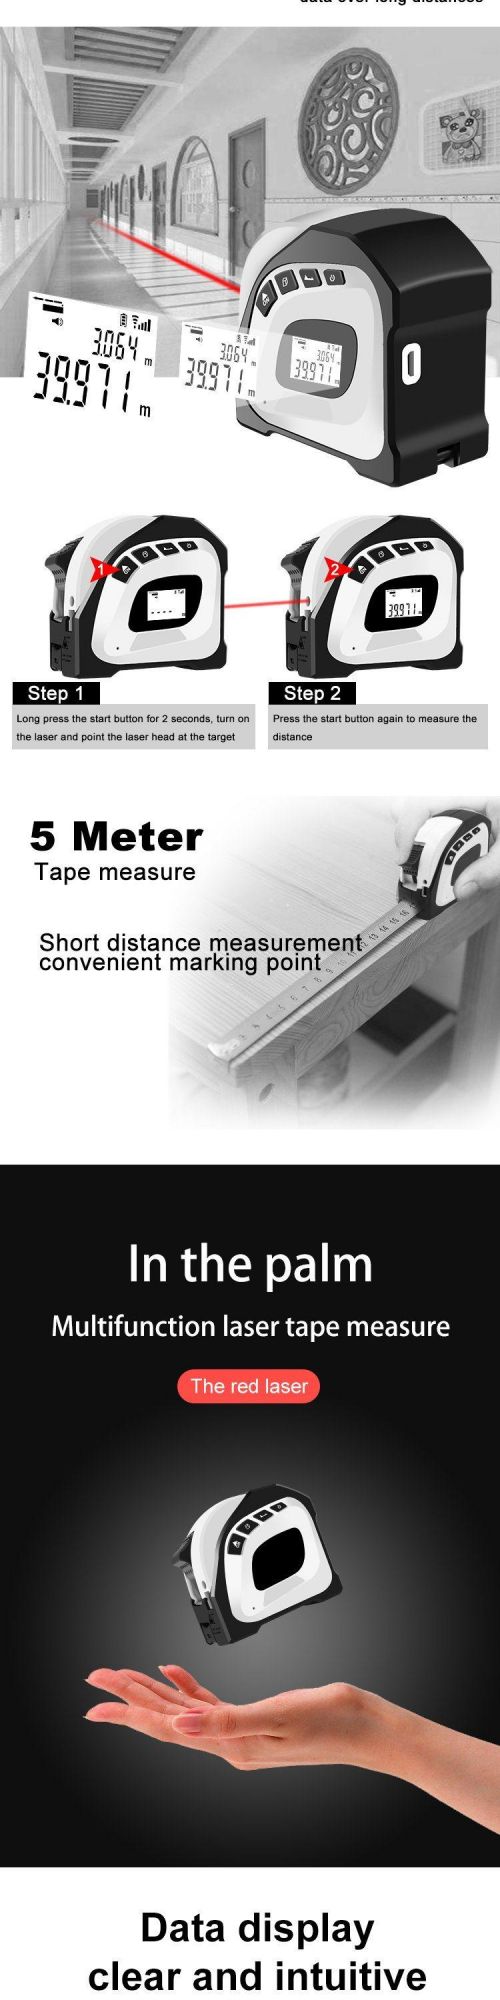 40m Laser Rangefinder Digital Tape Measure 5m